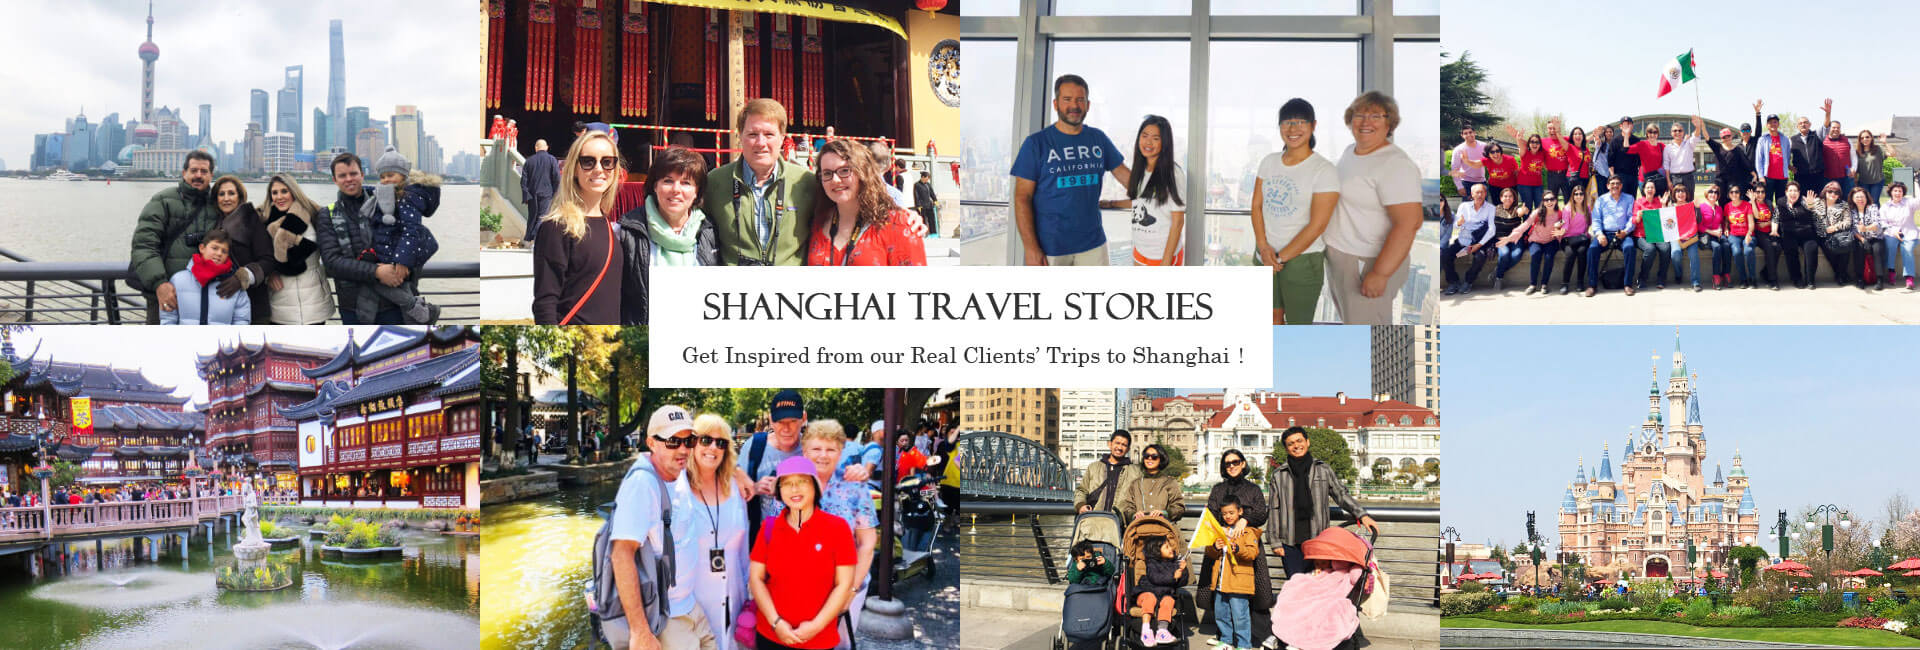 Shanghai Travel Stories